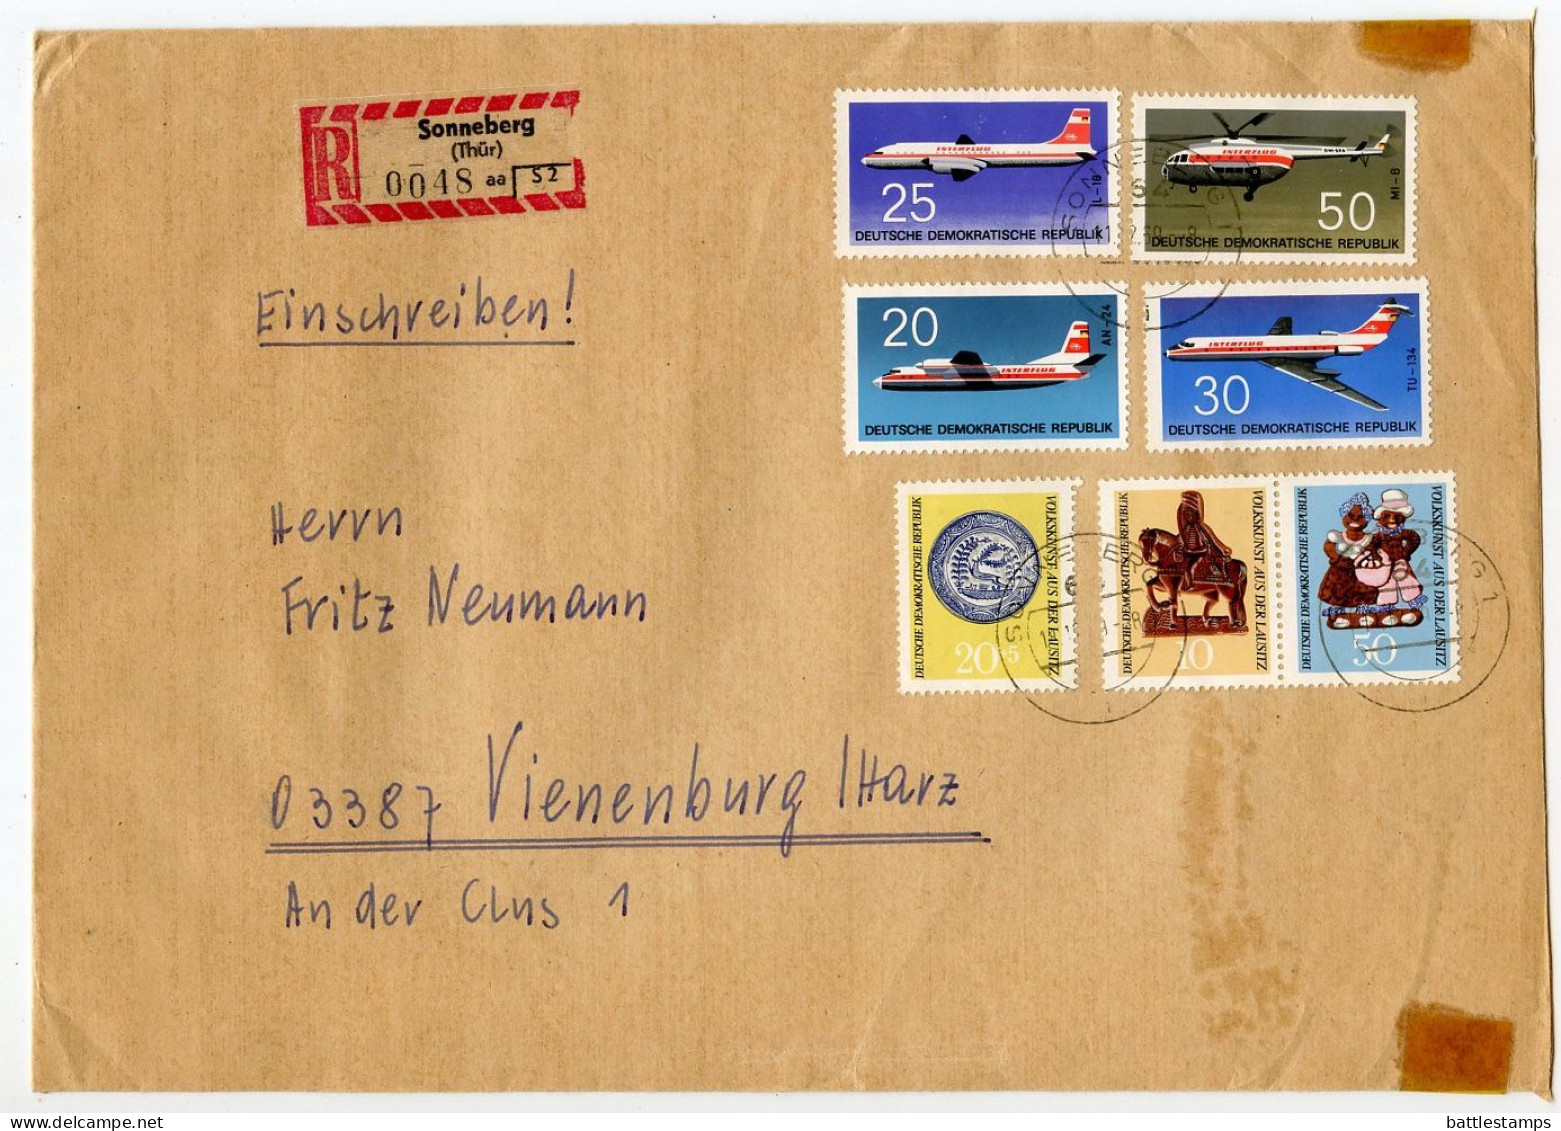 Germany, East 1969 Registered Cover; Sonneberg To Vienenburg; Folk Art & Aviation Stamps - Airplanes & Helicopter - Briefe U. Dokumente